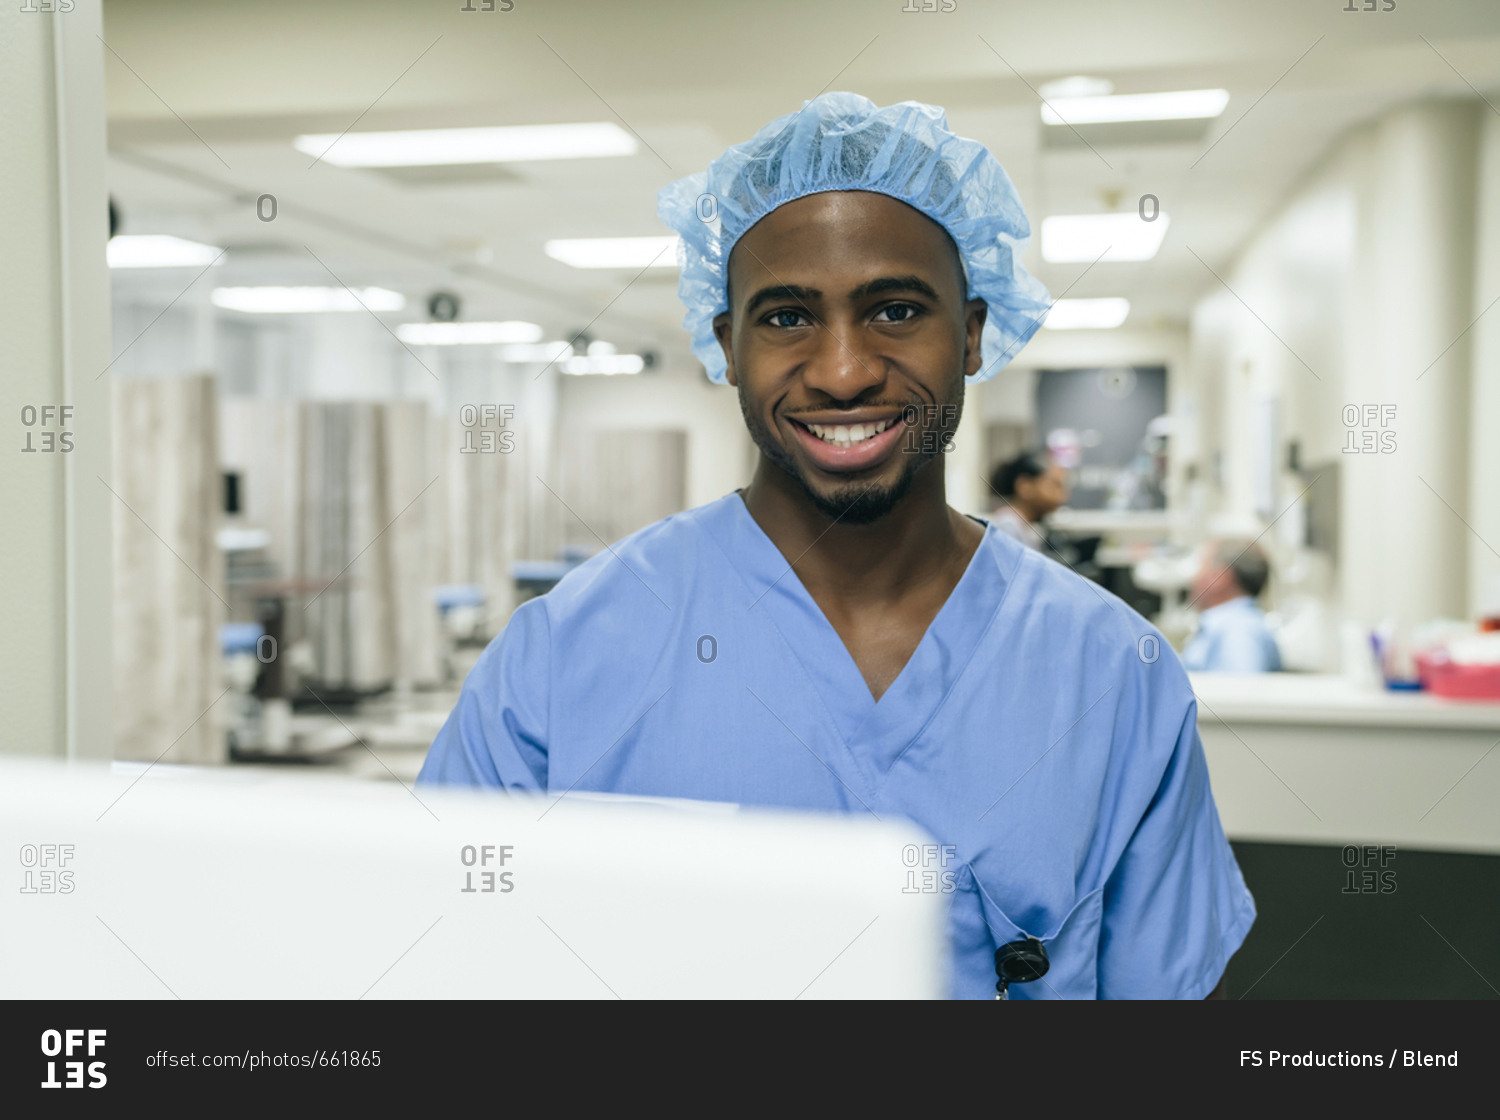 Portrait of smiling Black doctor in hospital